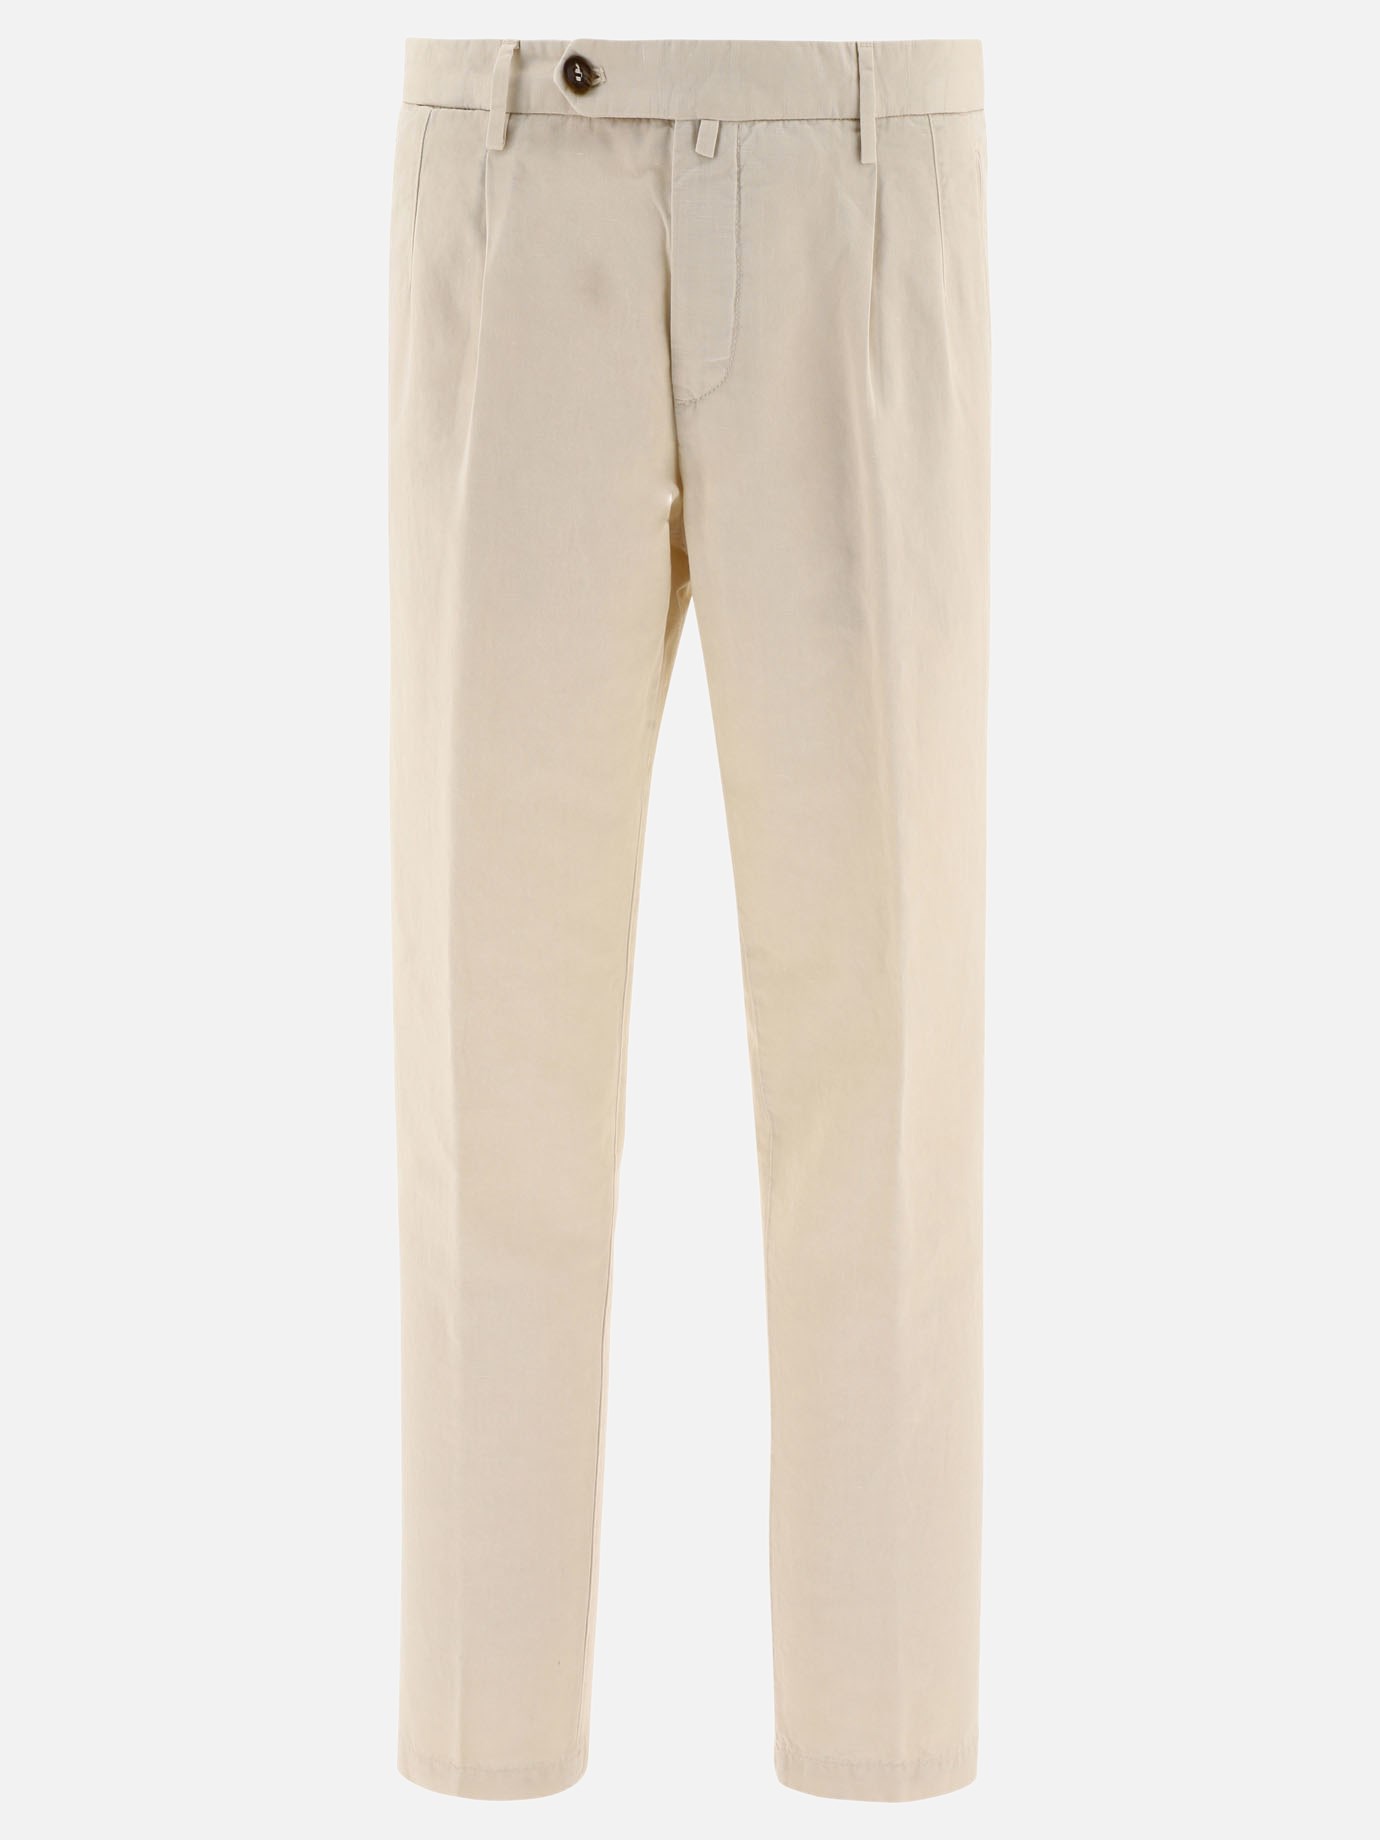 Pantaloni  Cernobbio by Briglia 1949 - 4